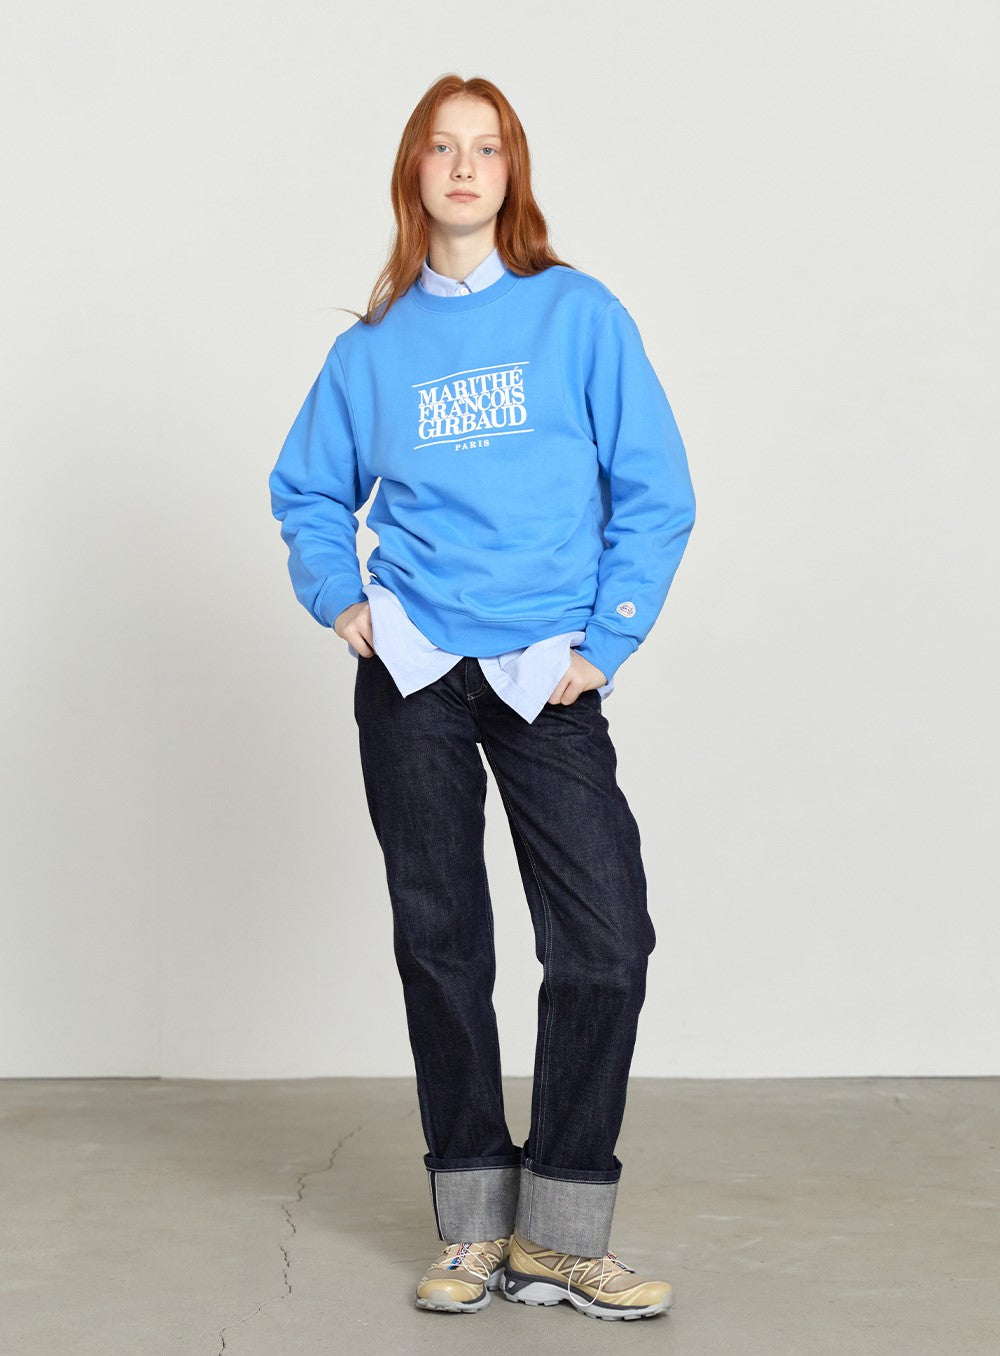 Marithe Francois Girbaud • Classic Logo Sweatshirt (Blue)